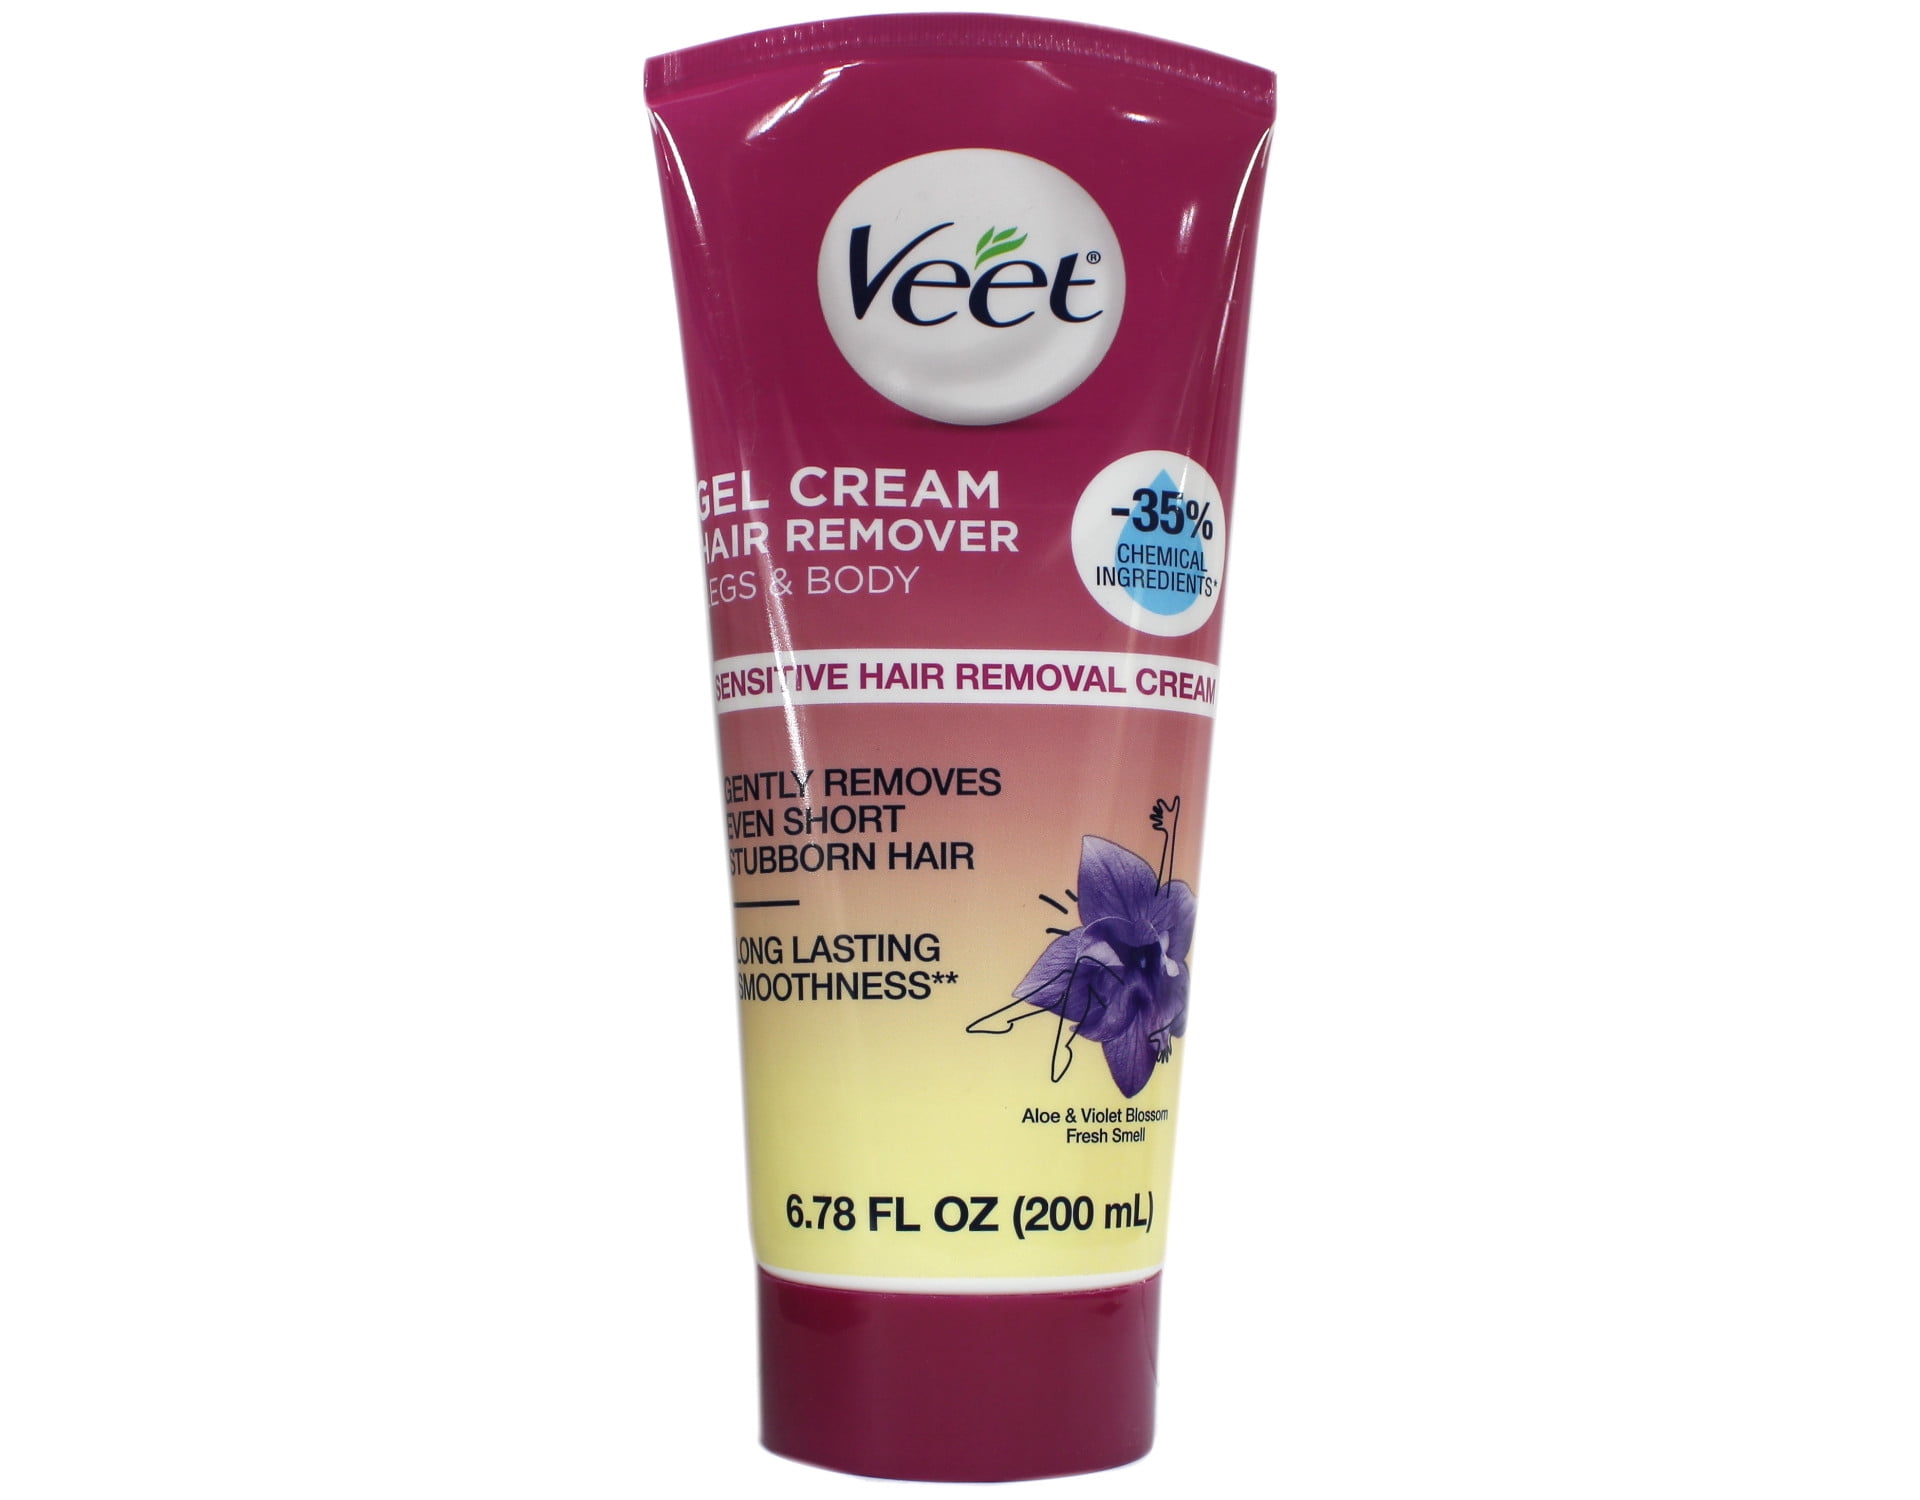 Veet Legs & Body 3 in 1 Gel Cream, 6.78 oz. - Walmart.com